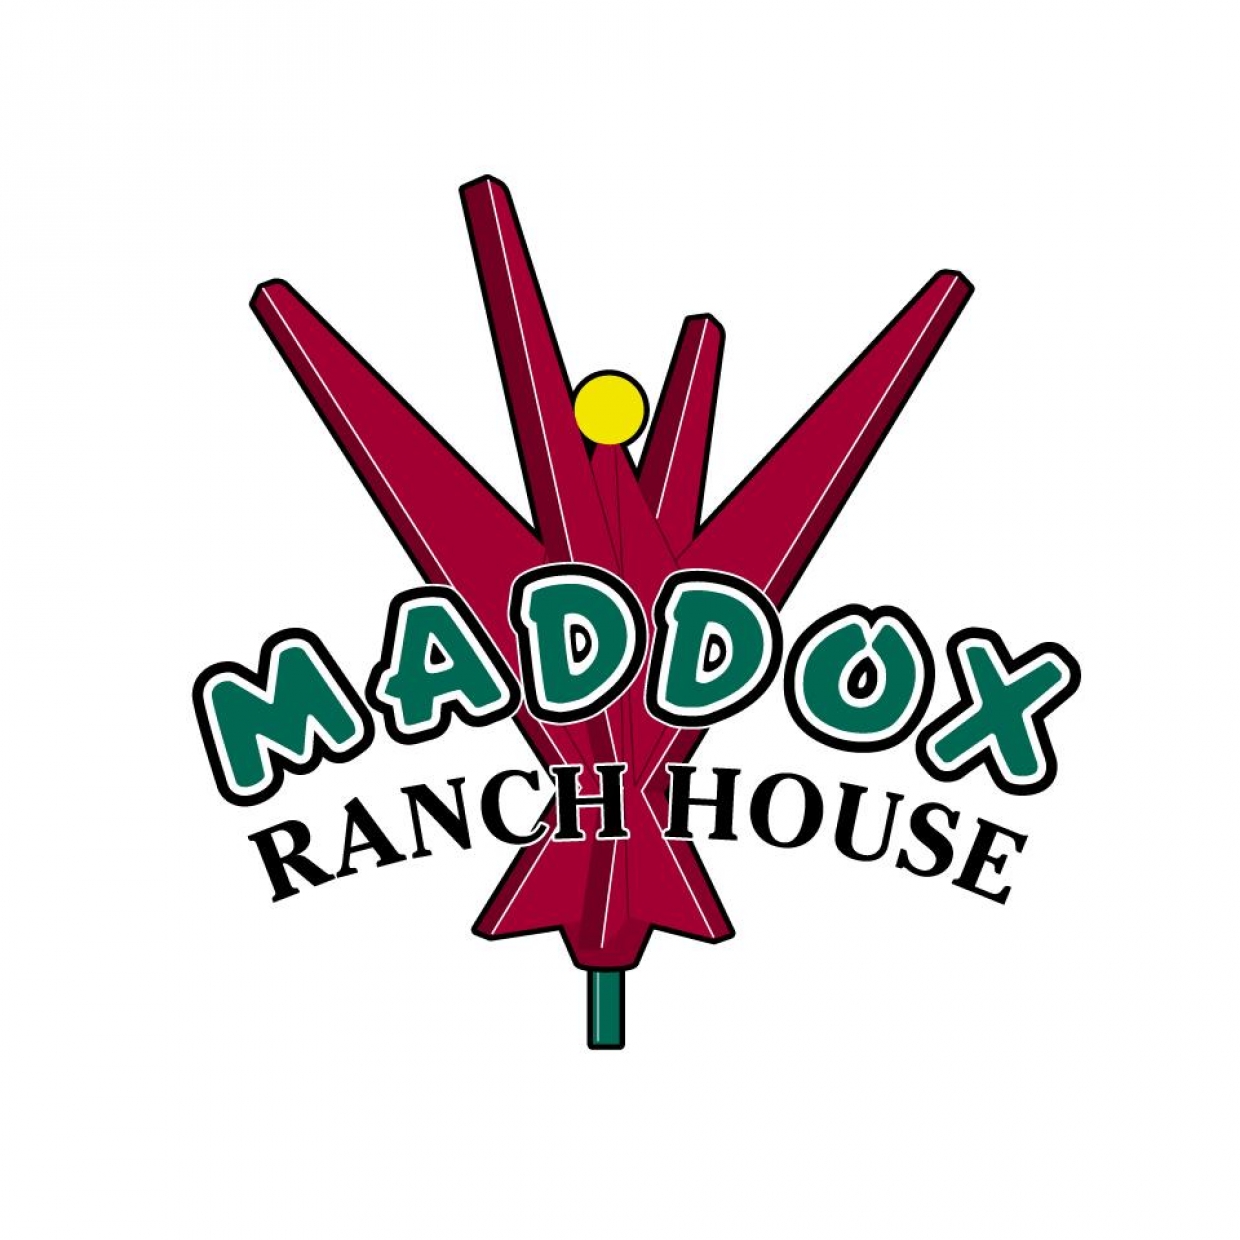 Maddox Ranch House